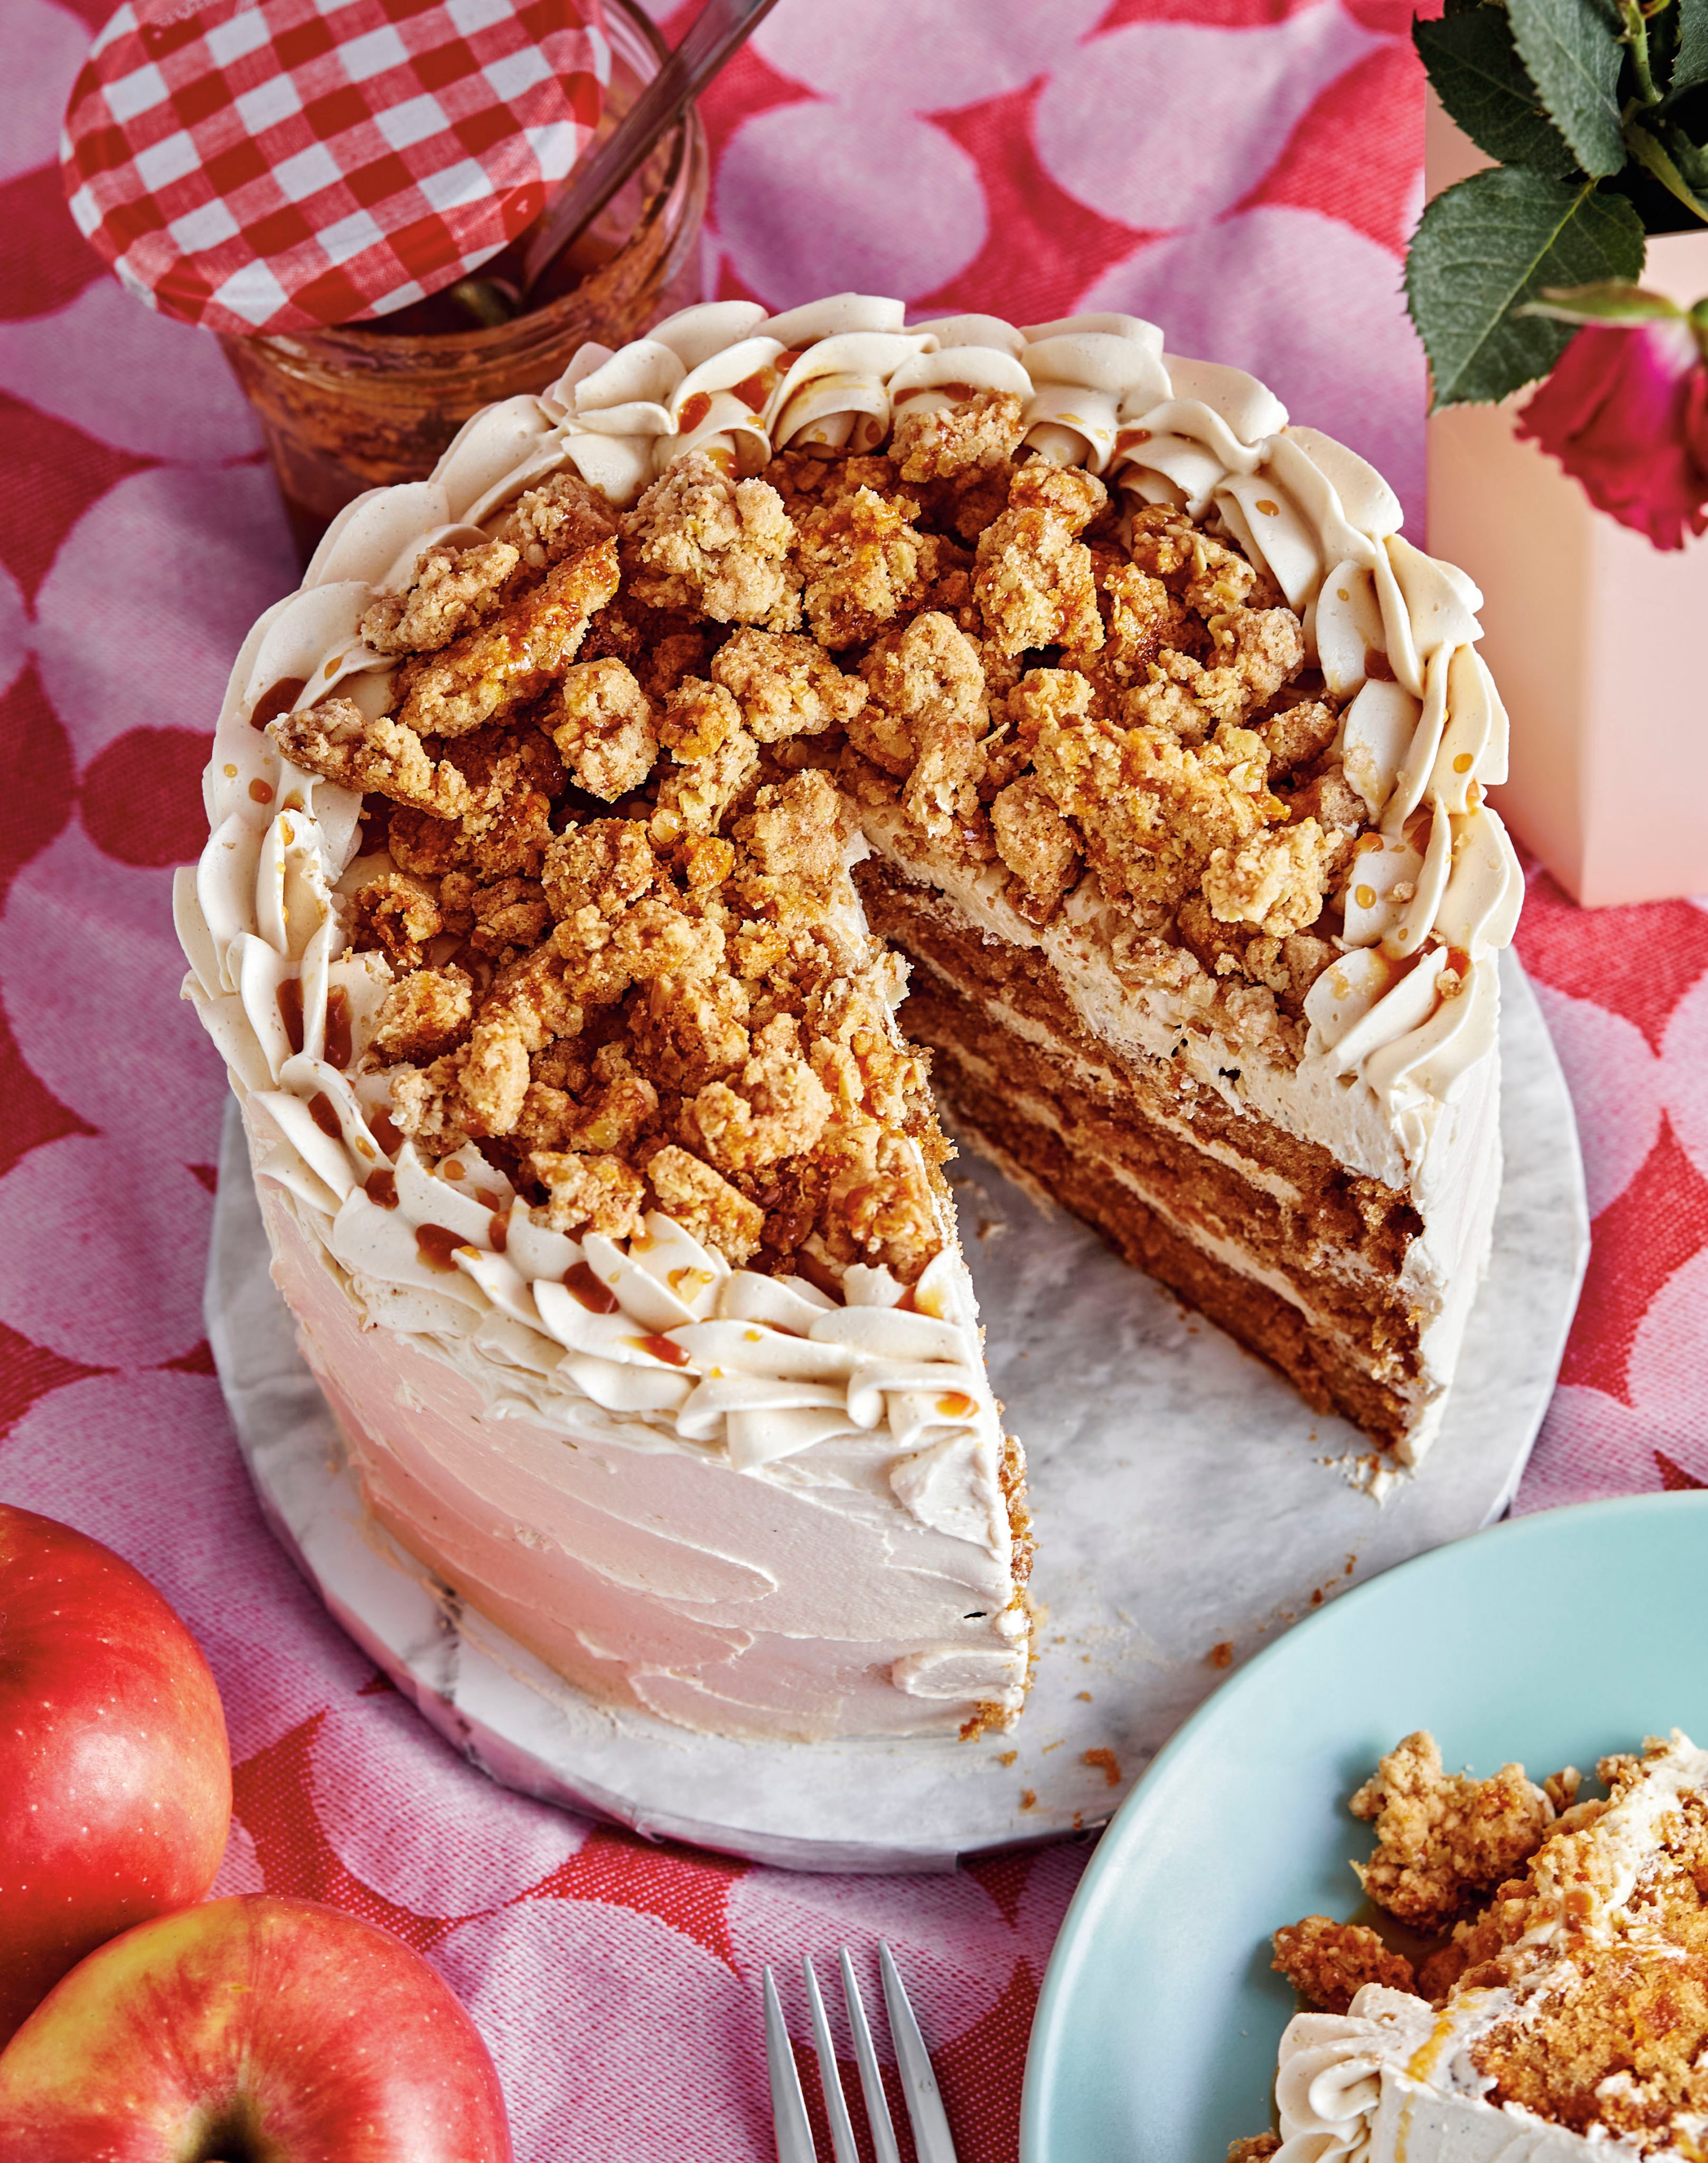 Plantcakes by Lyndsay Sung - Apple caramel cake with oatmeal cookie crumble. Photo: Random House